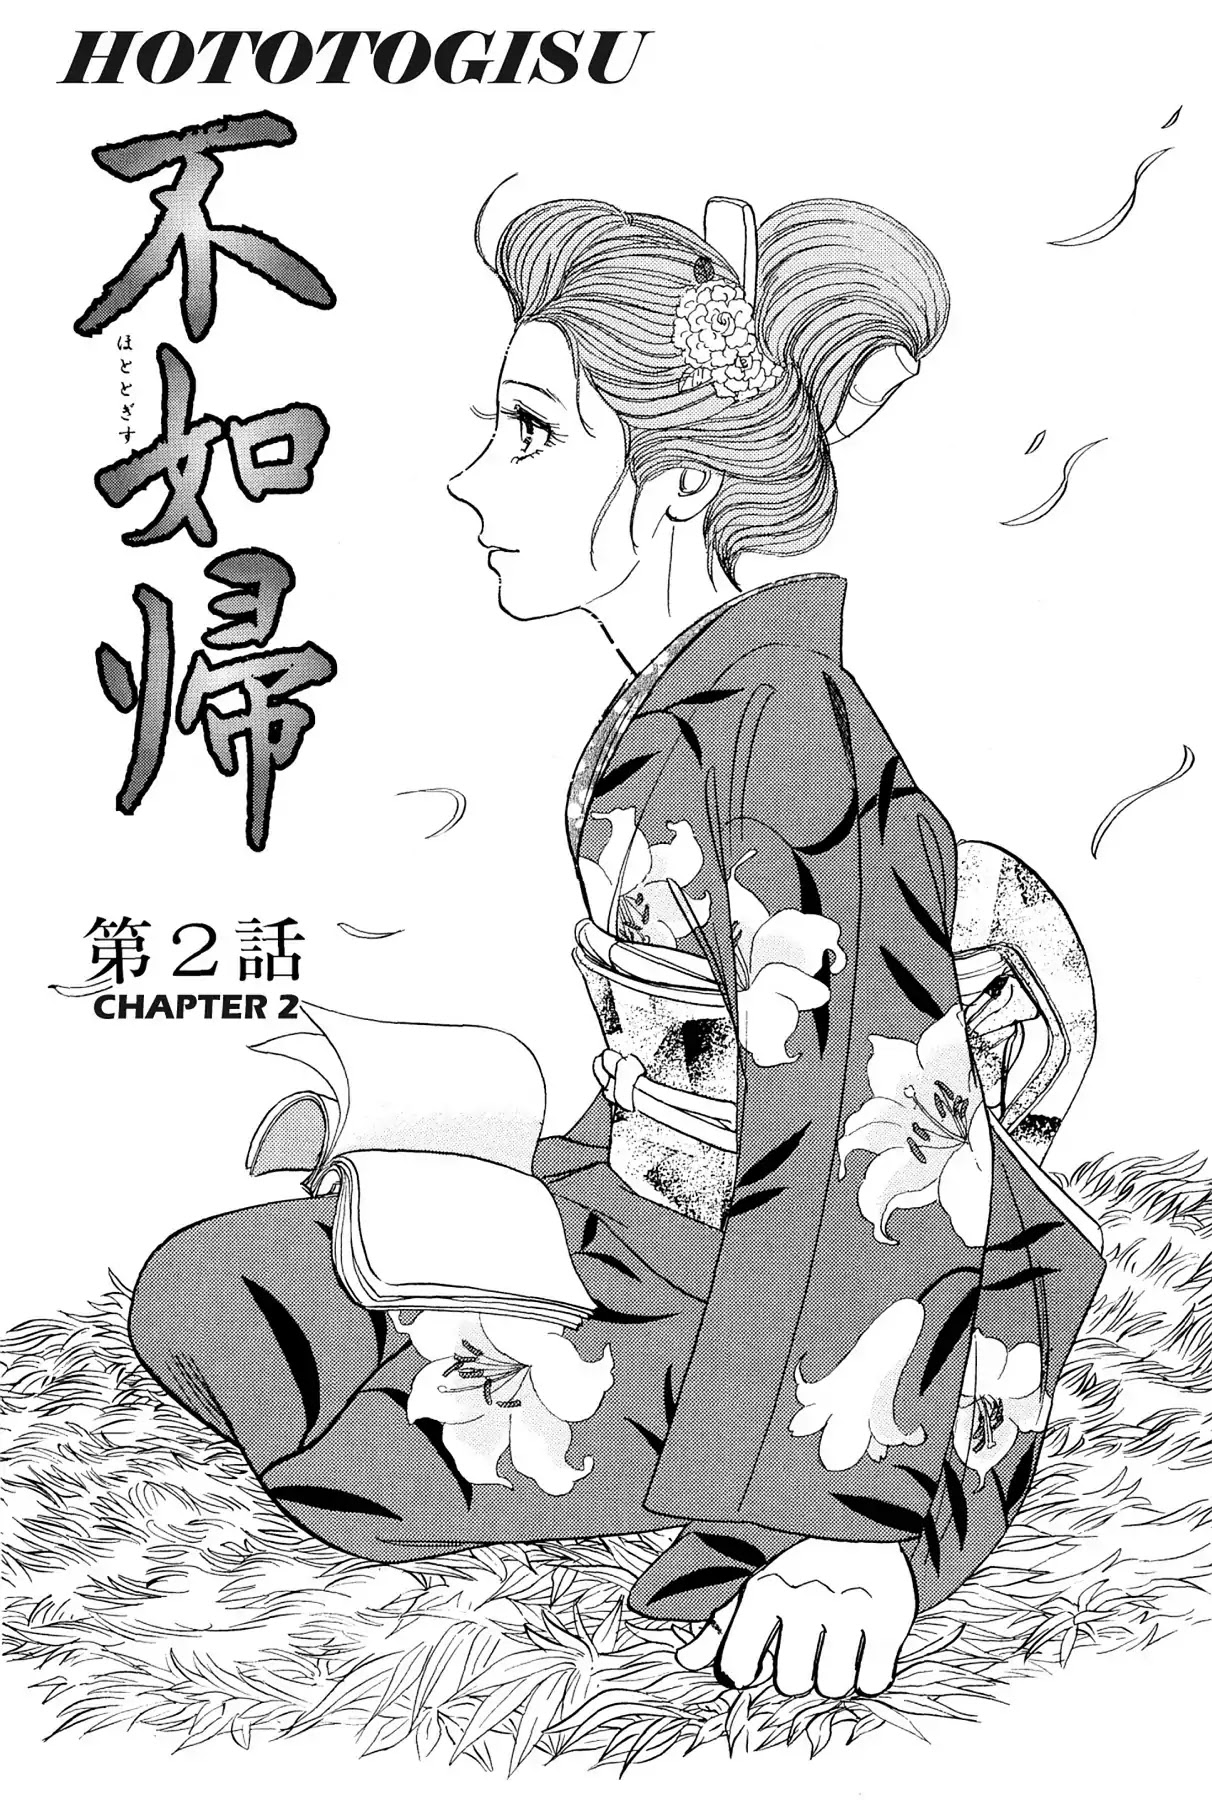 Hototogisu Chapter 2 #2